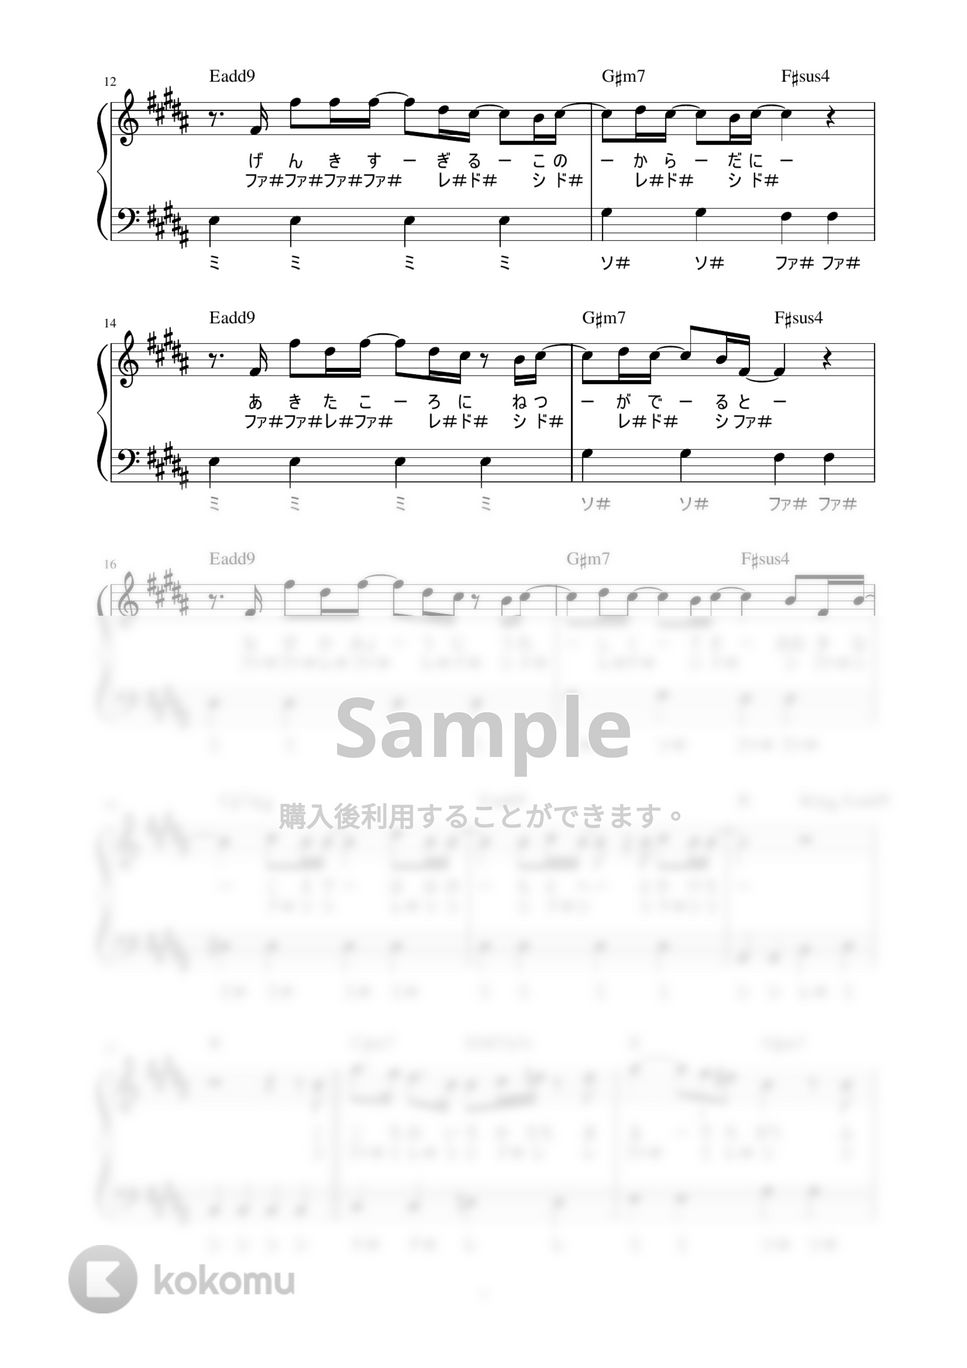 RADWIMPS - うるうびと (かんたん / 歌詞付き / ドレミ付き / 初心者) by piano.tokyo